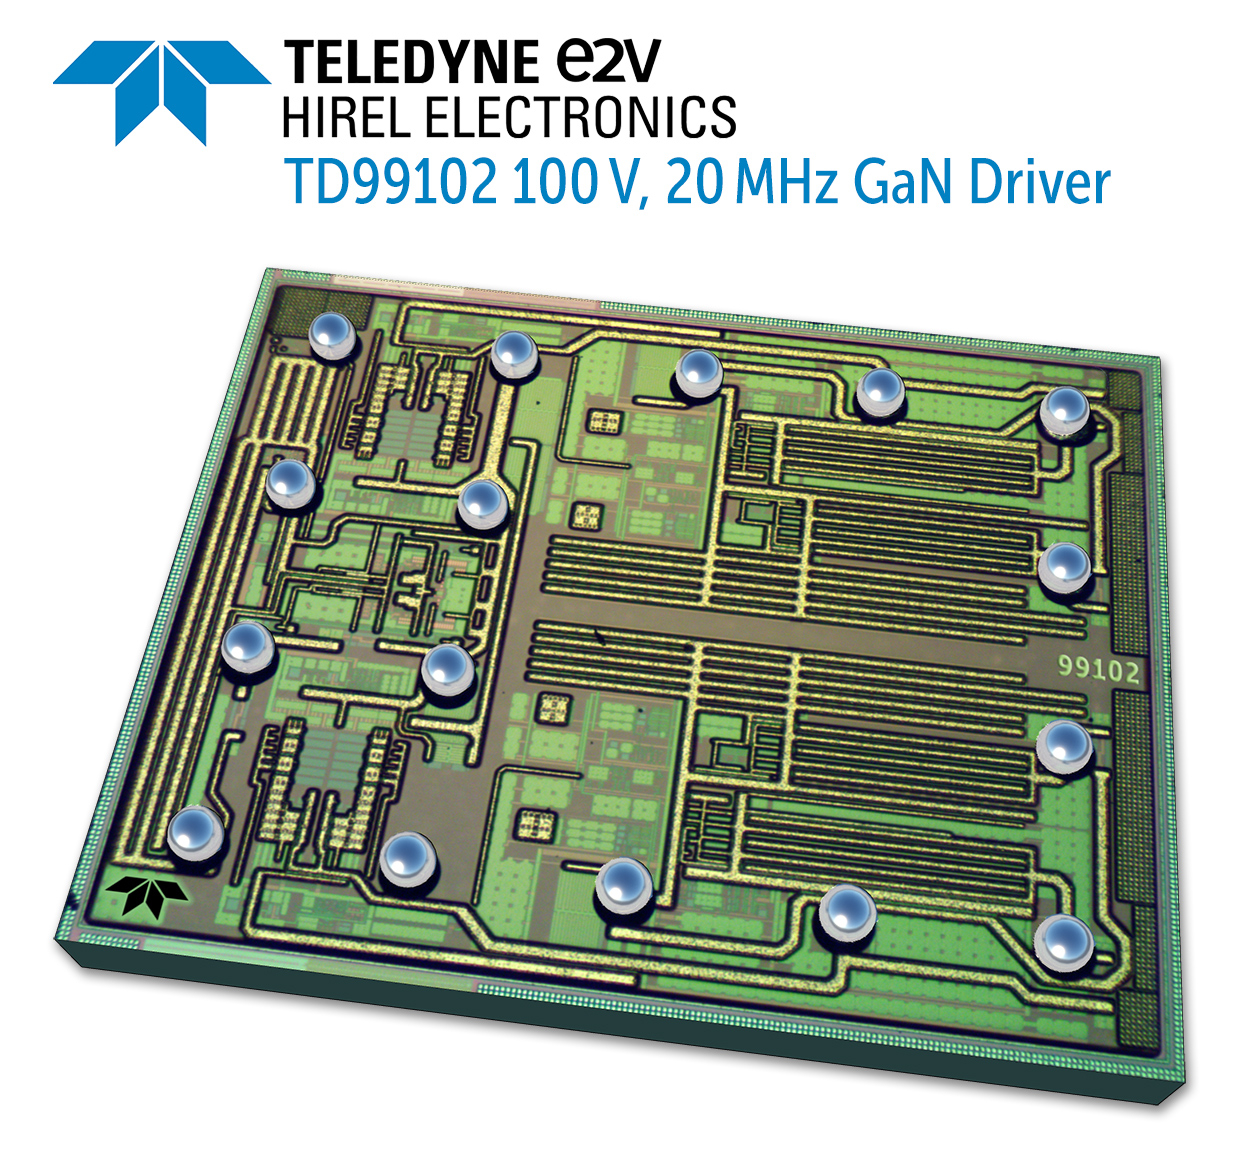 Teledyne e2v HiRel Announces New 100 V High-Speed 20 MHz FET and GaN Transistor Driver Flip Chip Die